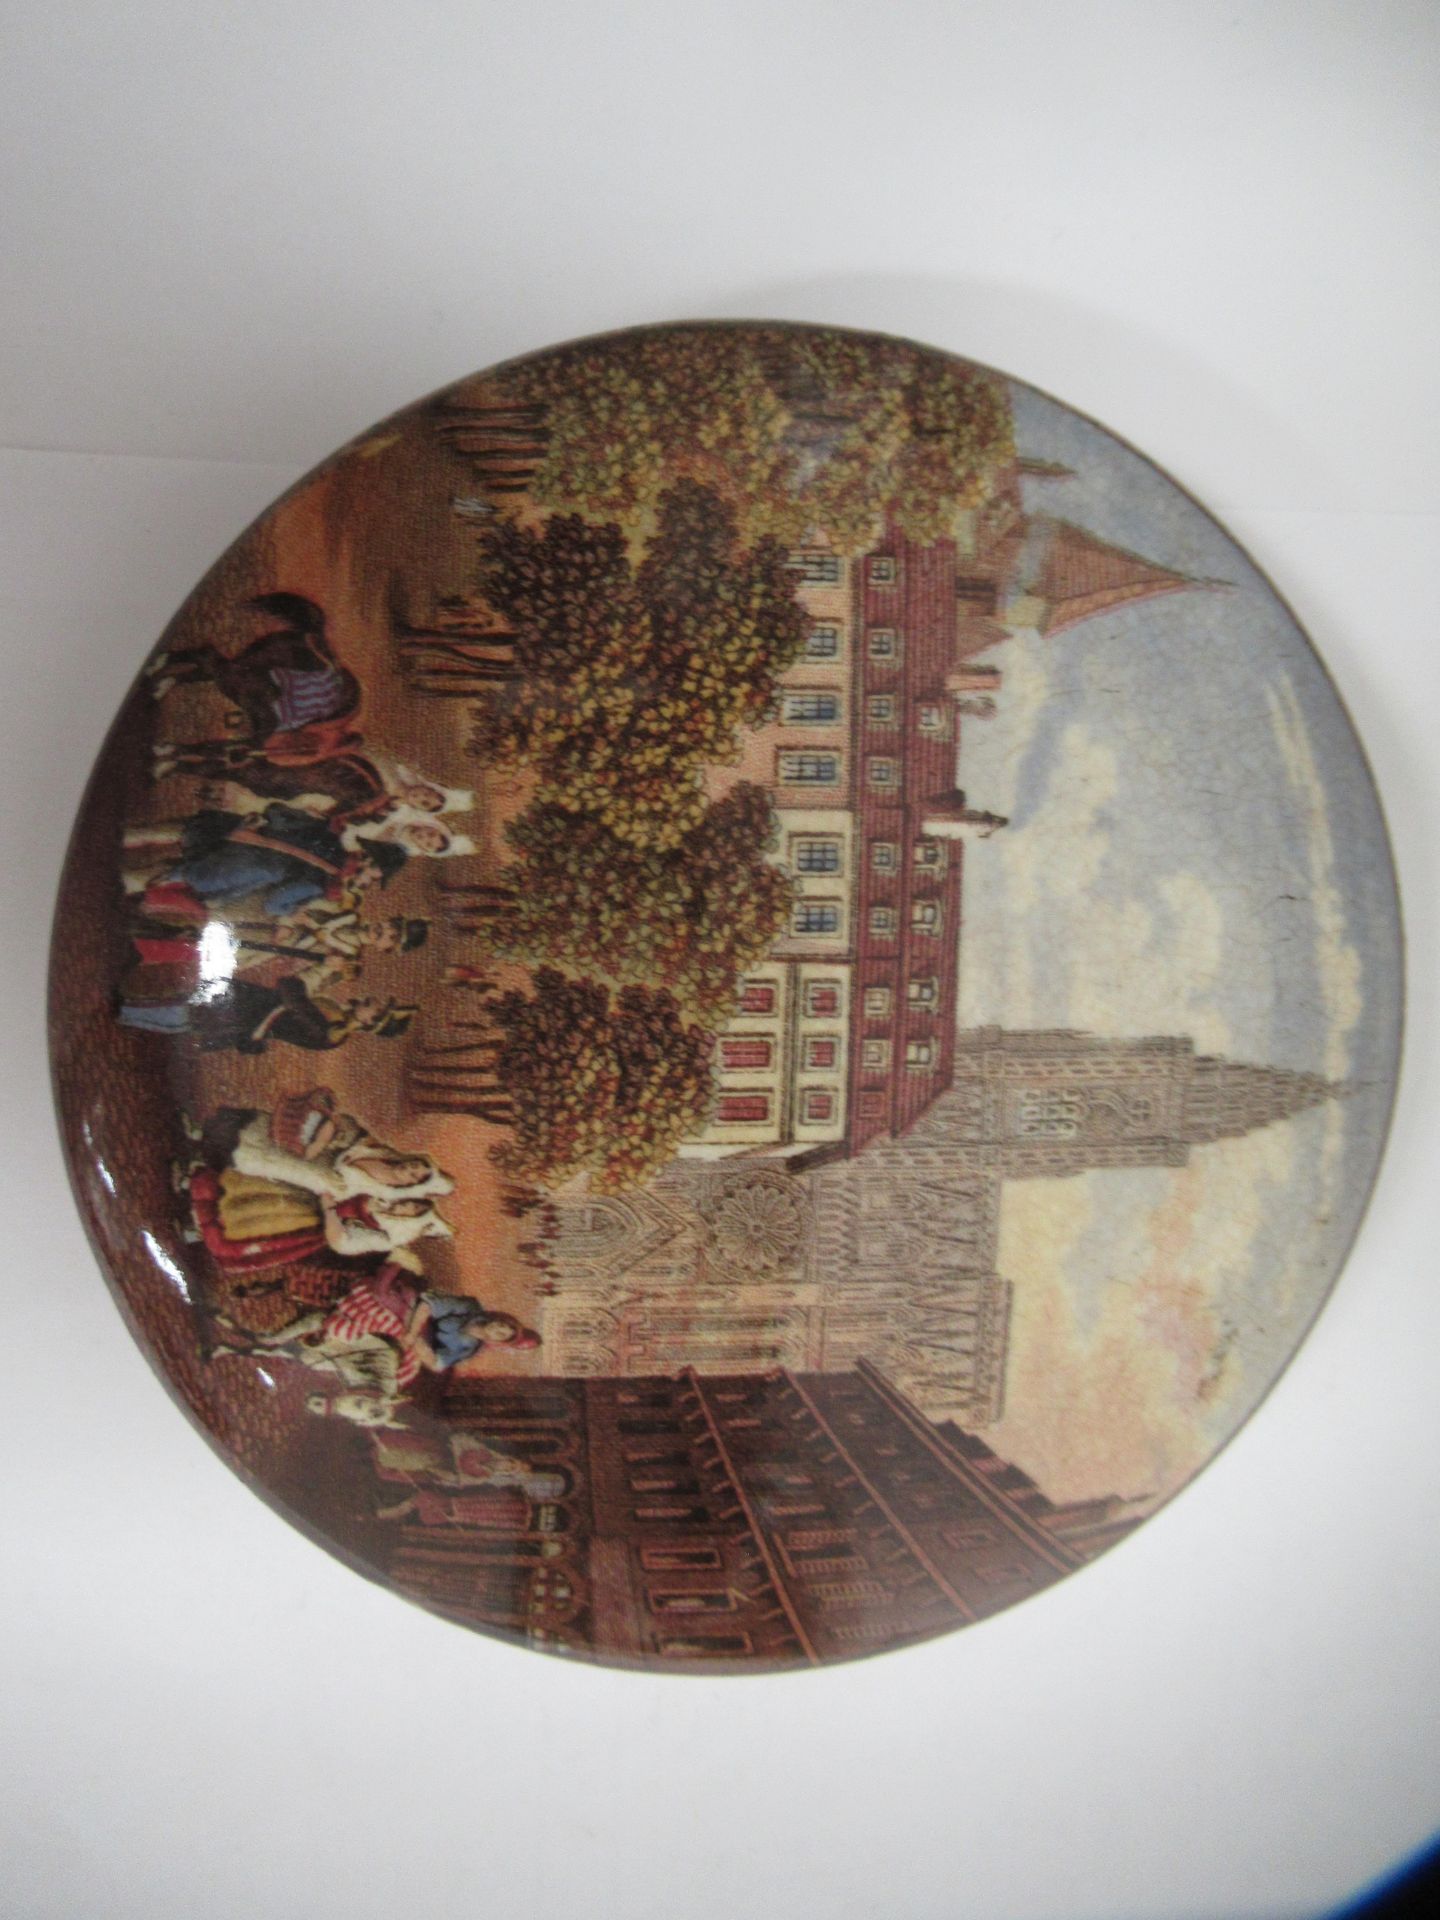 6x Prattware ceramic lids including 'The Residence of Anne Hathaway', 'Strasburg', 'Albert Memorial' - Image 2 of 36